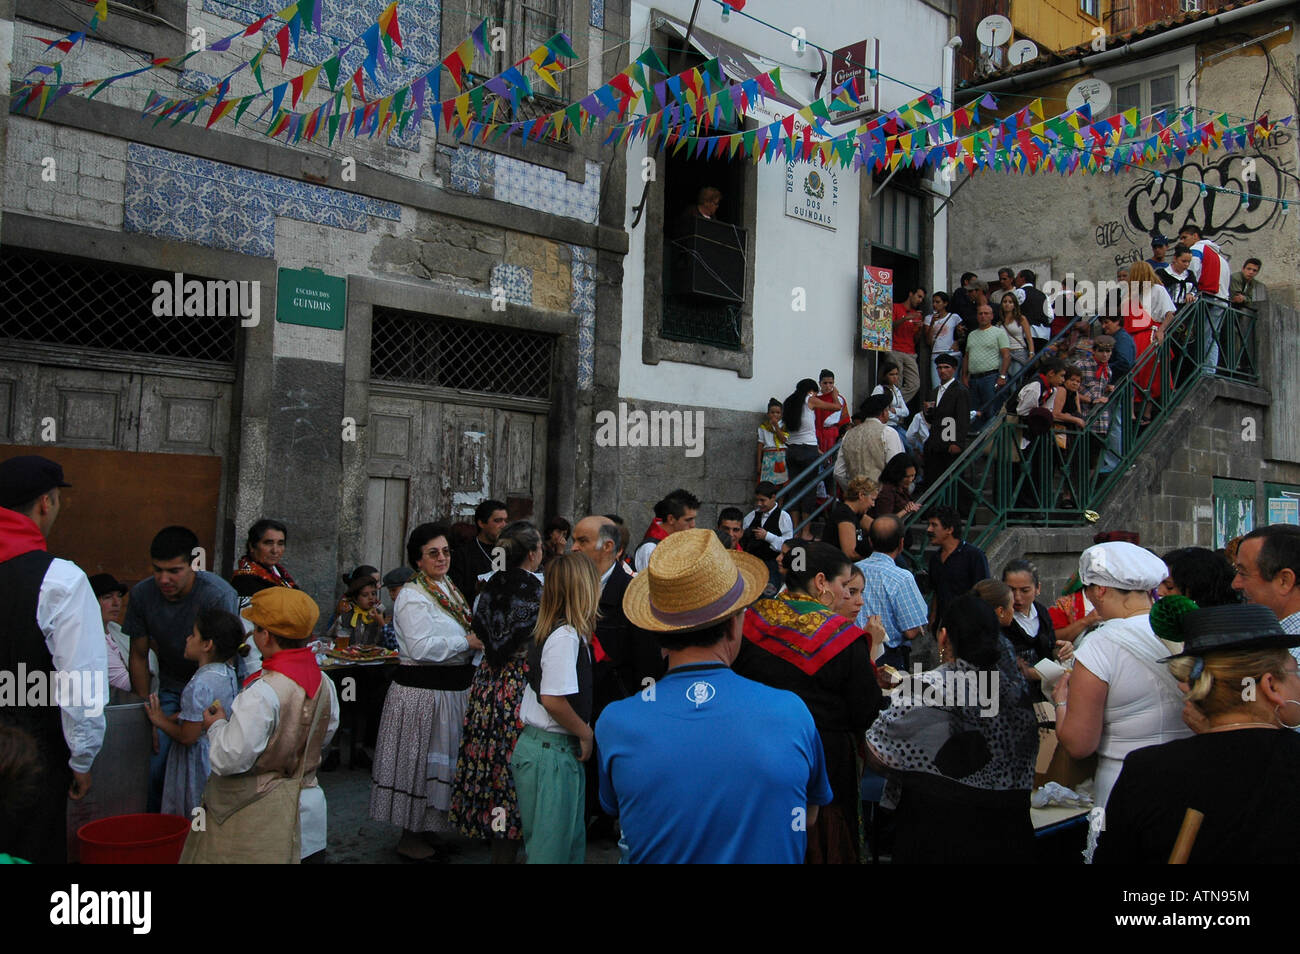 Members of the Gypsy community celebrating Festa de Sao Joao do Porto or Festival of St John in the city of Porto northern Portugal Stock Photo